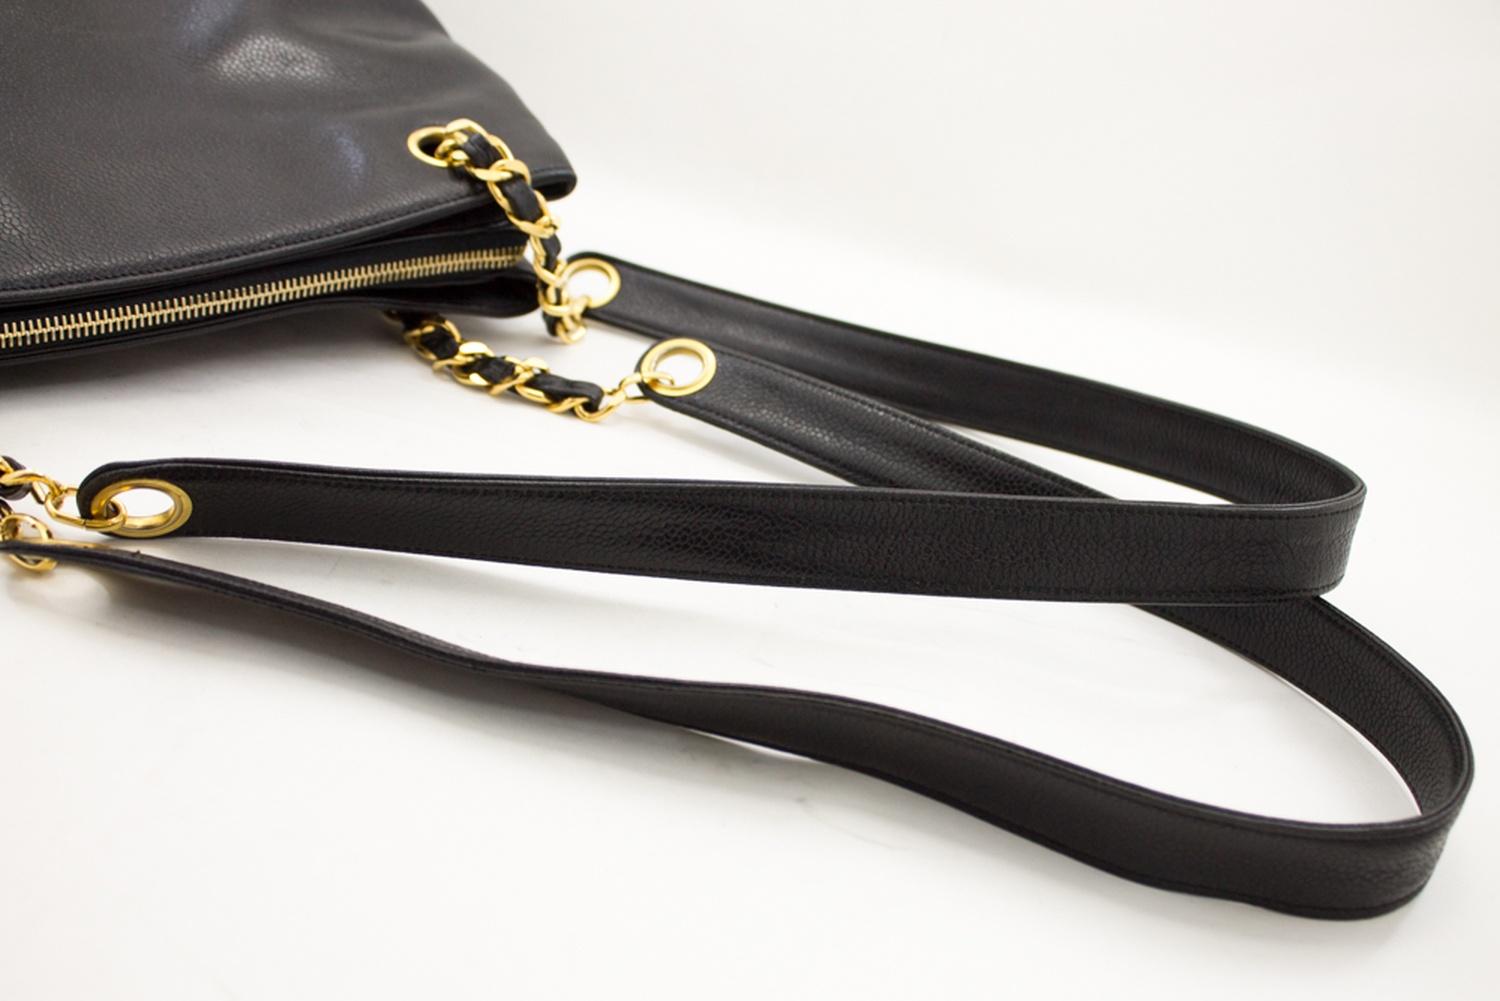 CHANEL Caviar Large Chain Shoulder Bag Leather Black Zip Goldper 14